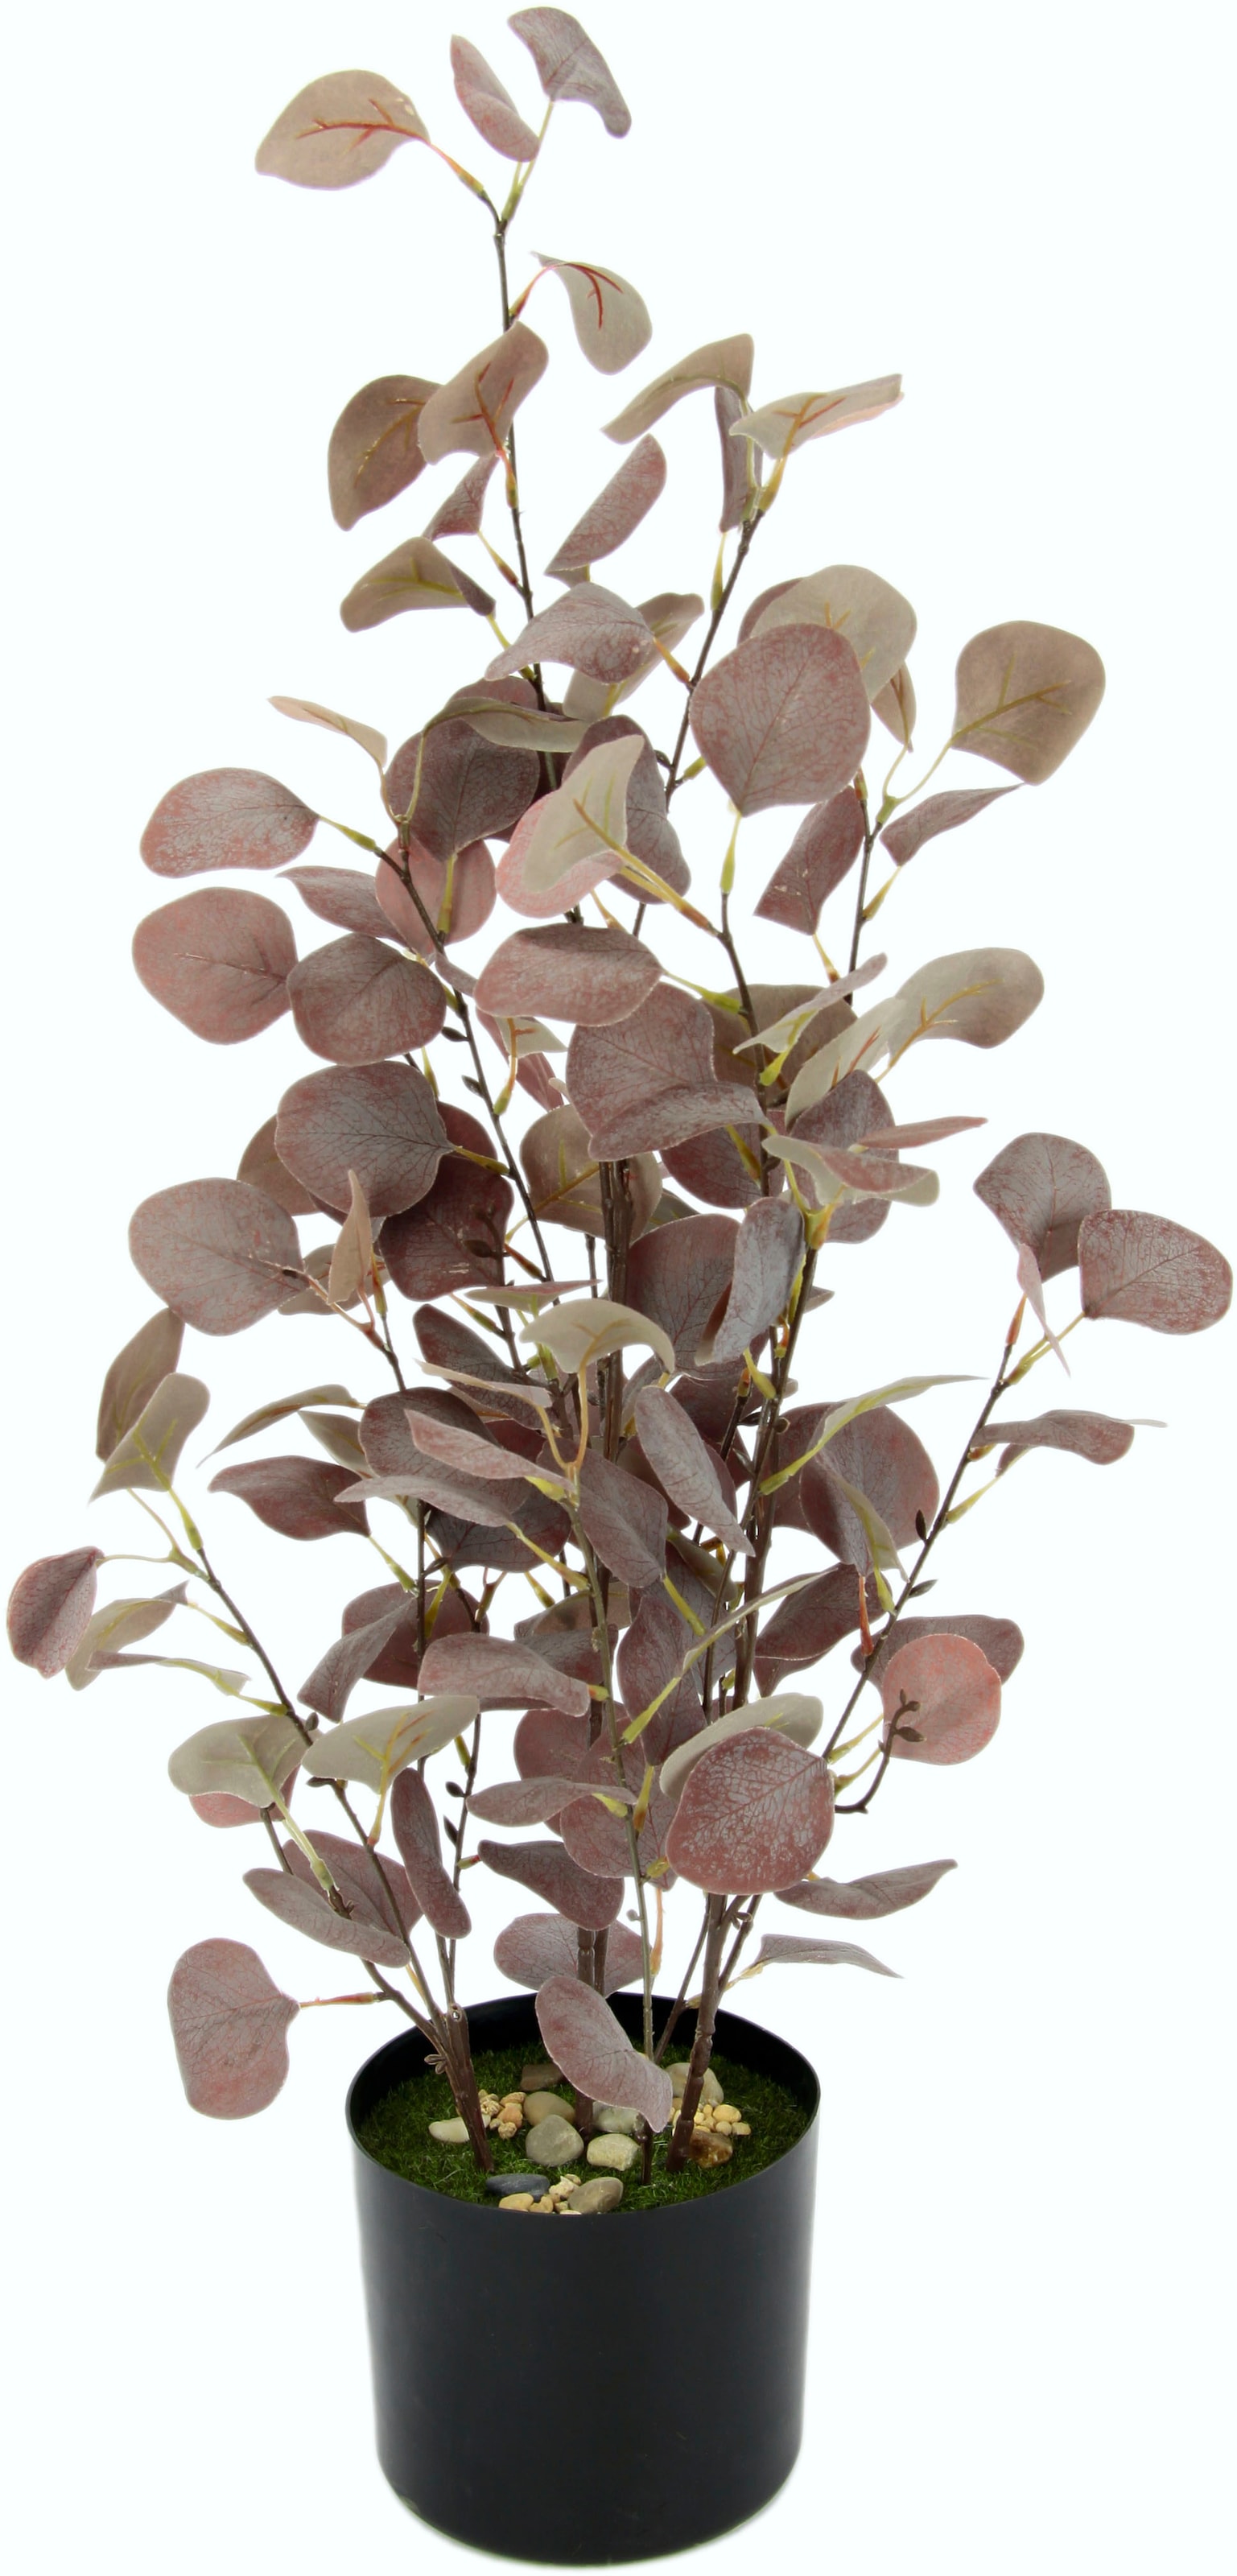 I.GE.A. Kunstpflanze »Eukalyptuspflanze«, im Kunststofftopf kaufen bequem